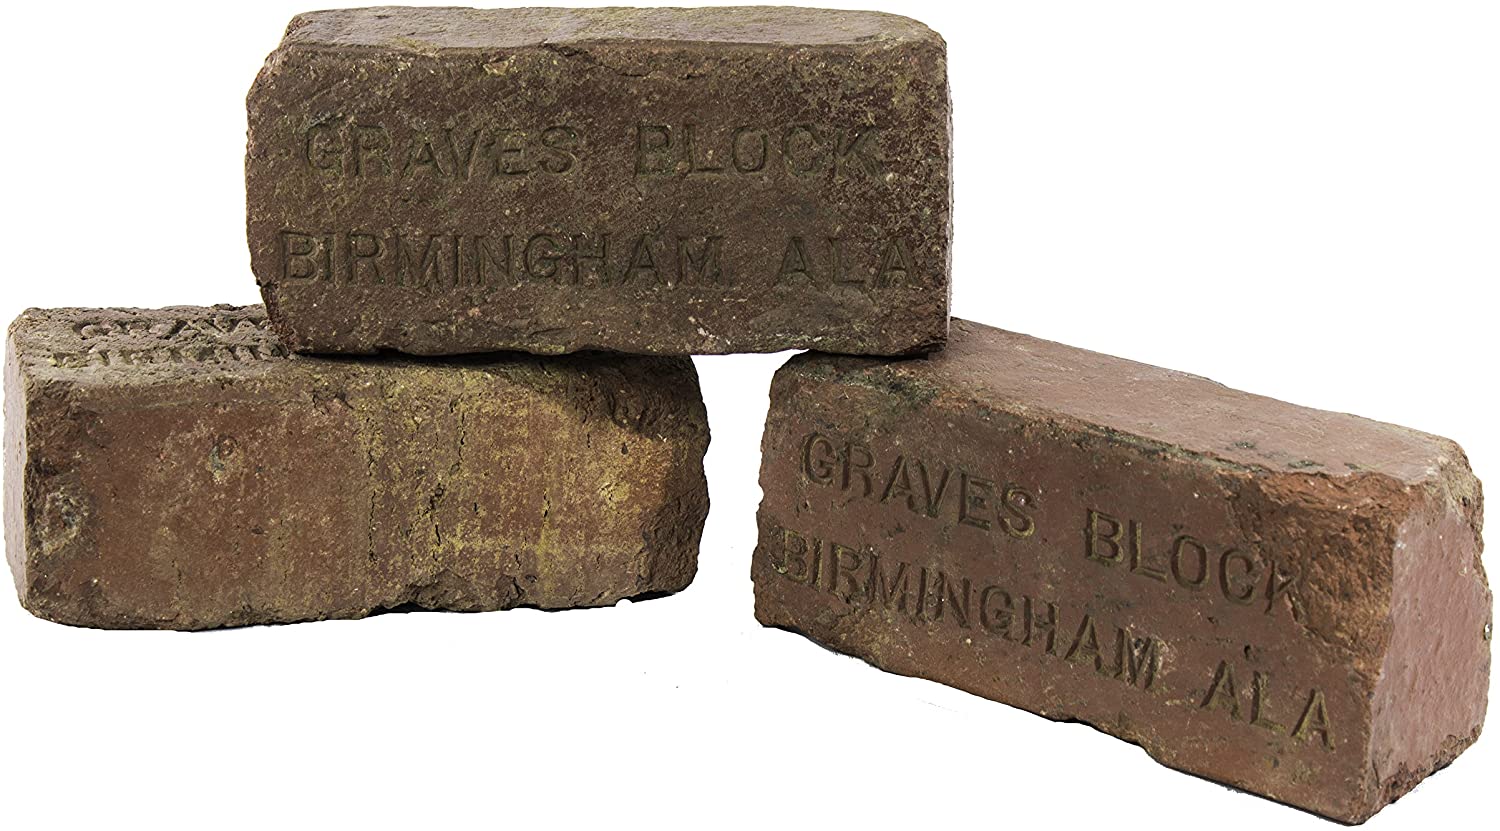 Graves Block bricks